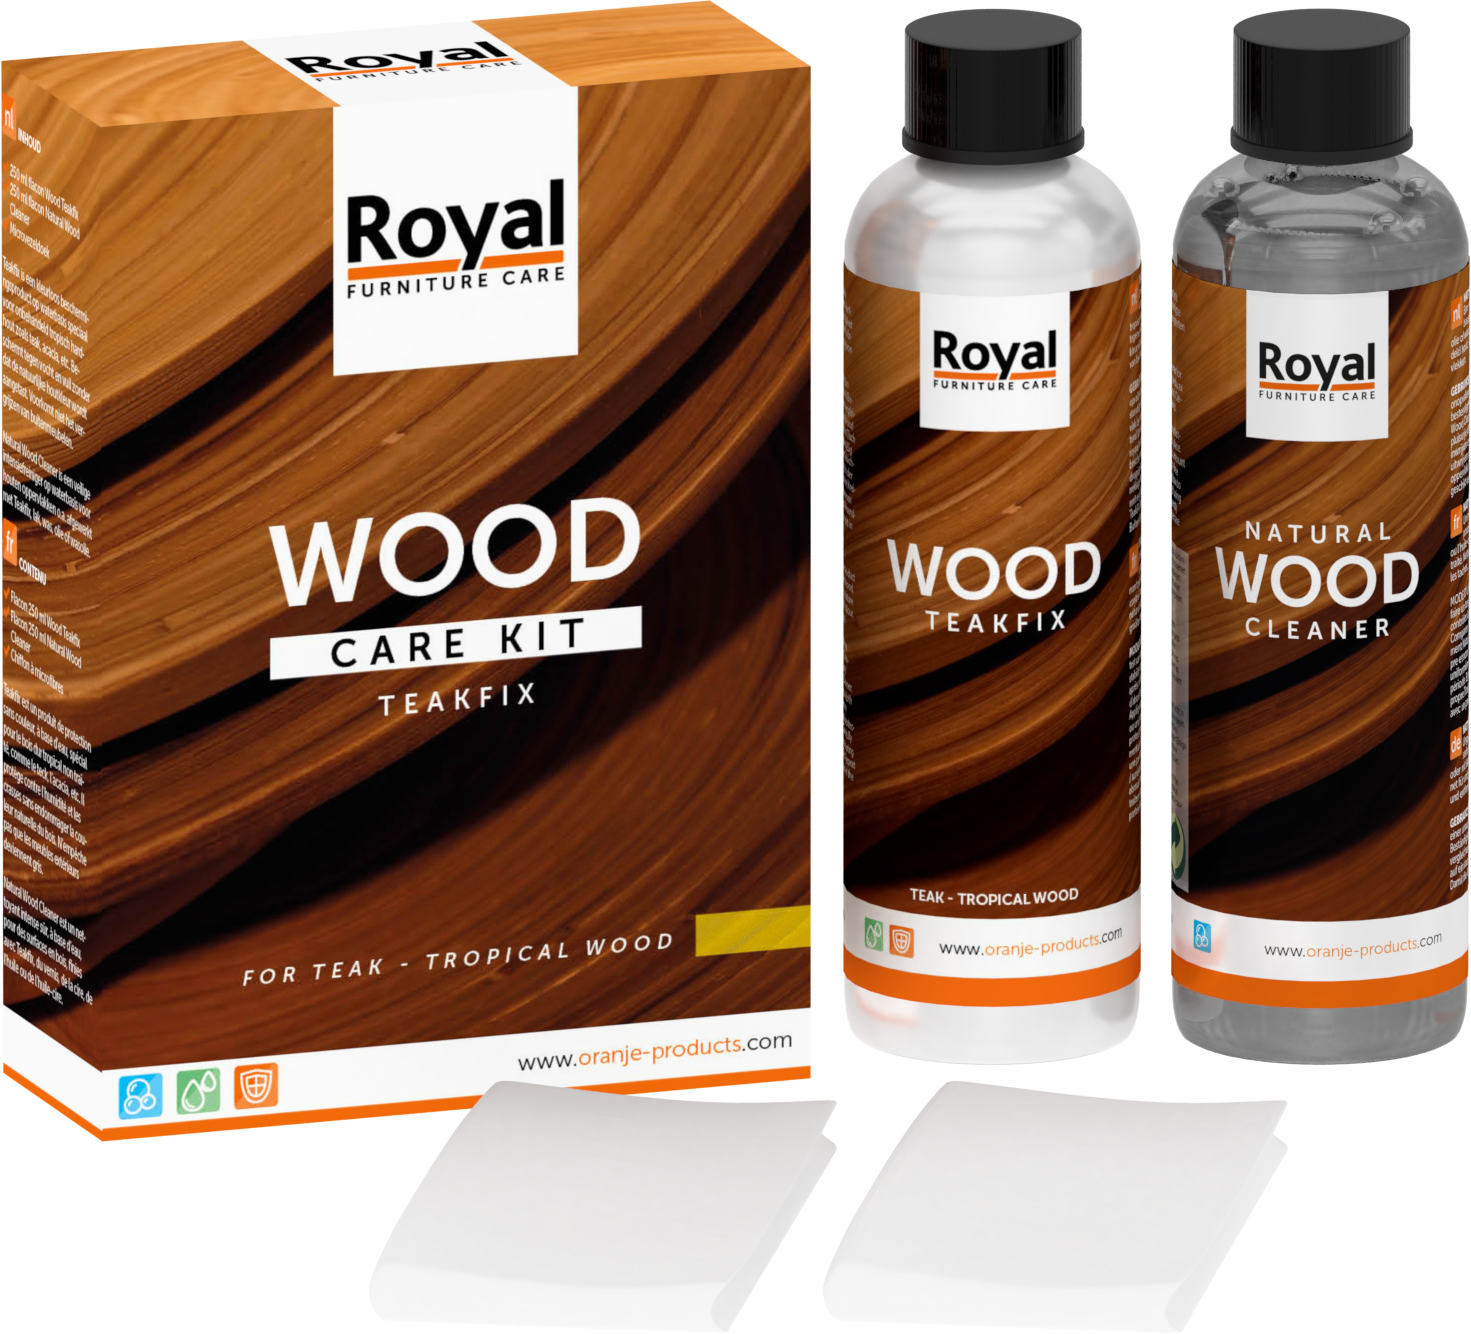 Royal furniture care - Care kit hardwood teakfix - 2 x 250ml